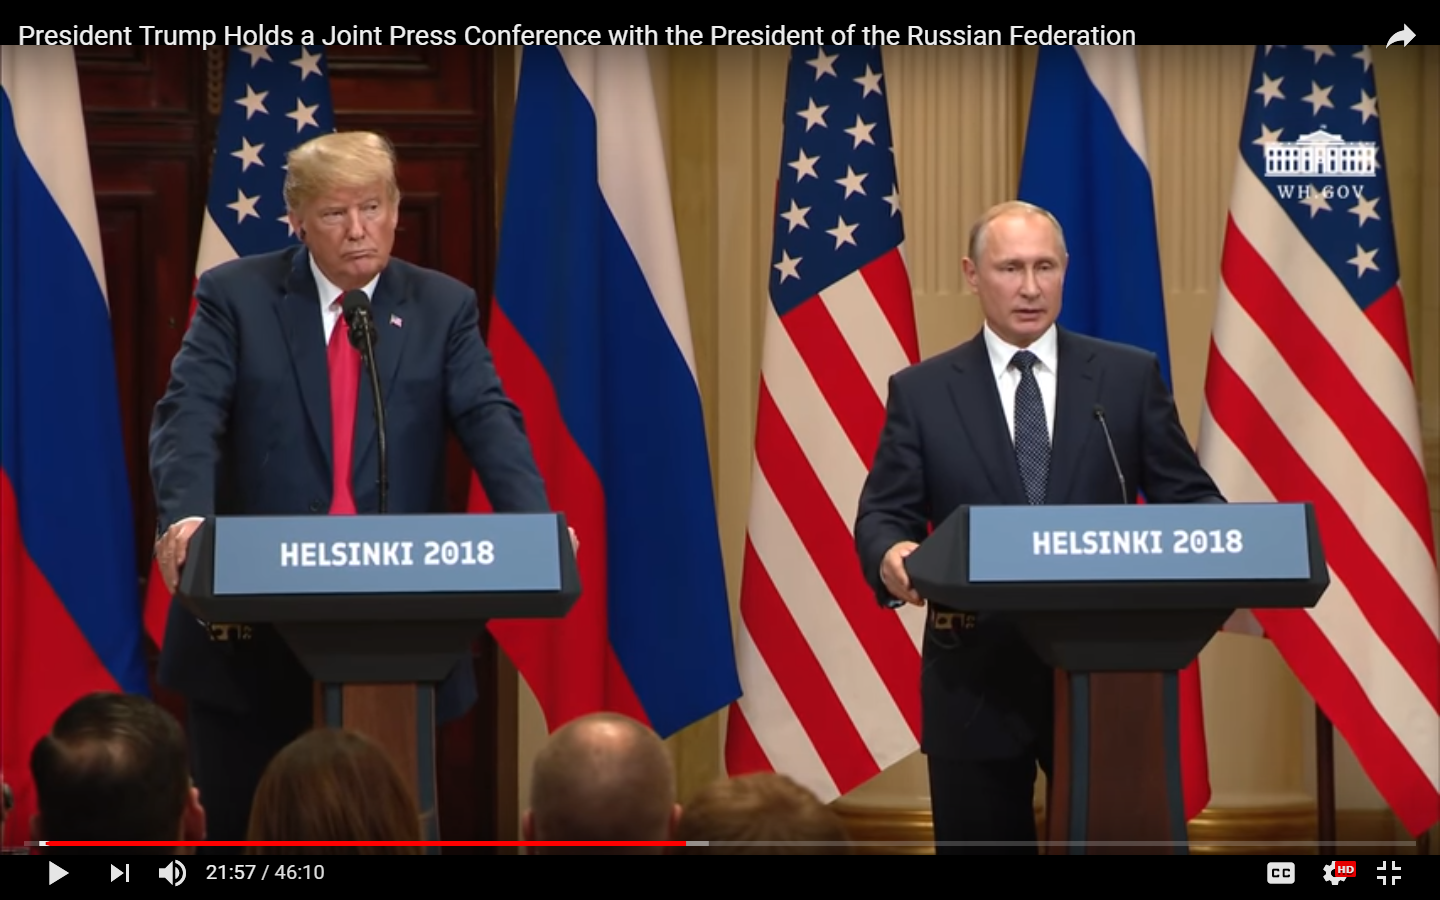 Trump and Putin meet in Helsinki 2018 - source: WhiteHouse.gov